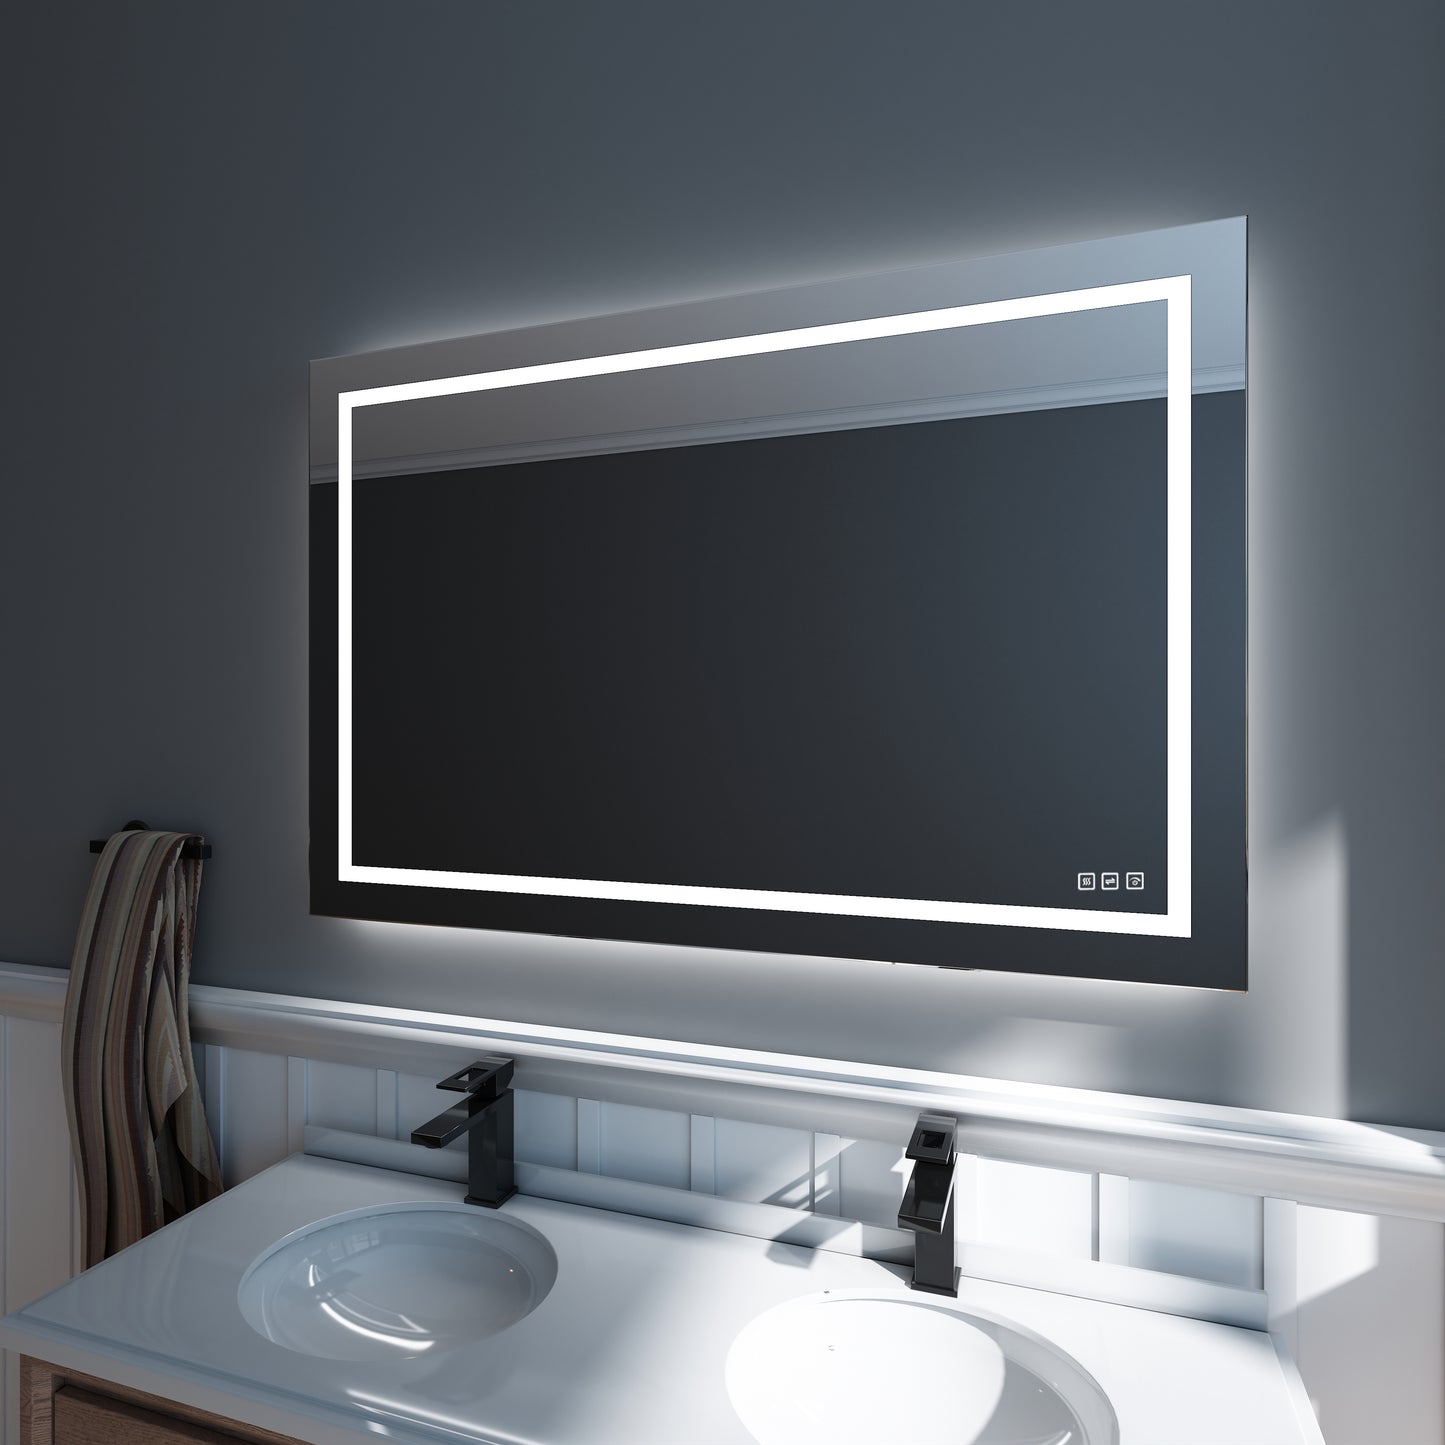 Waterpar® 48 in. W x 32 in. H LED Large Rectangular Frameless Anti-Fog Bathroom Mirror Front & Backlit